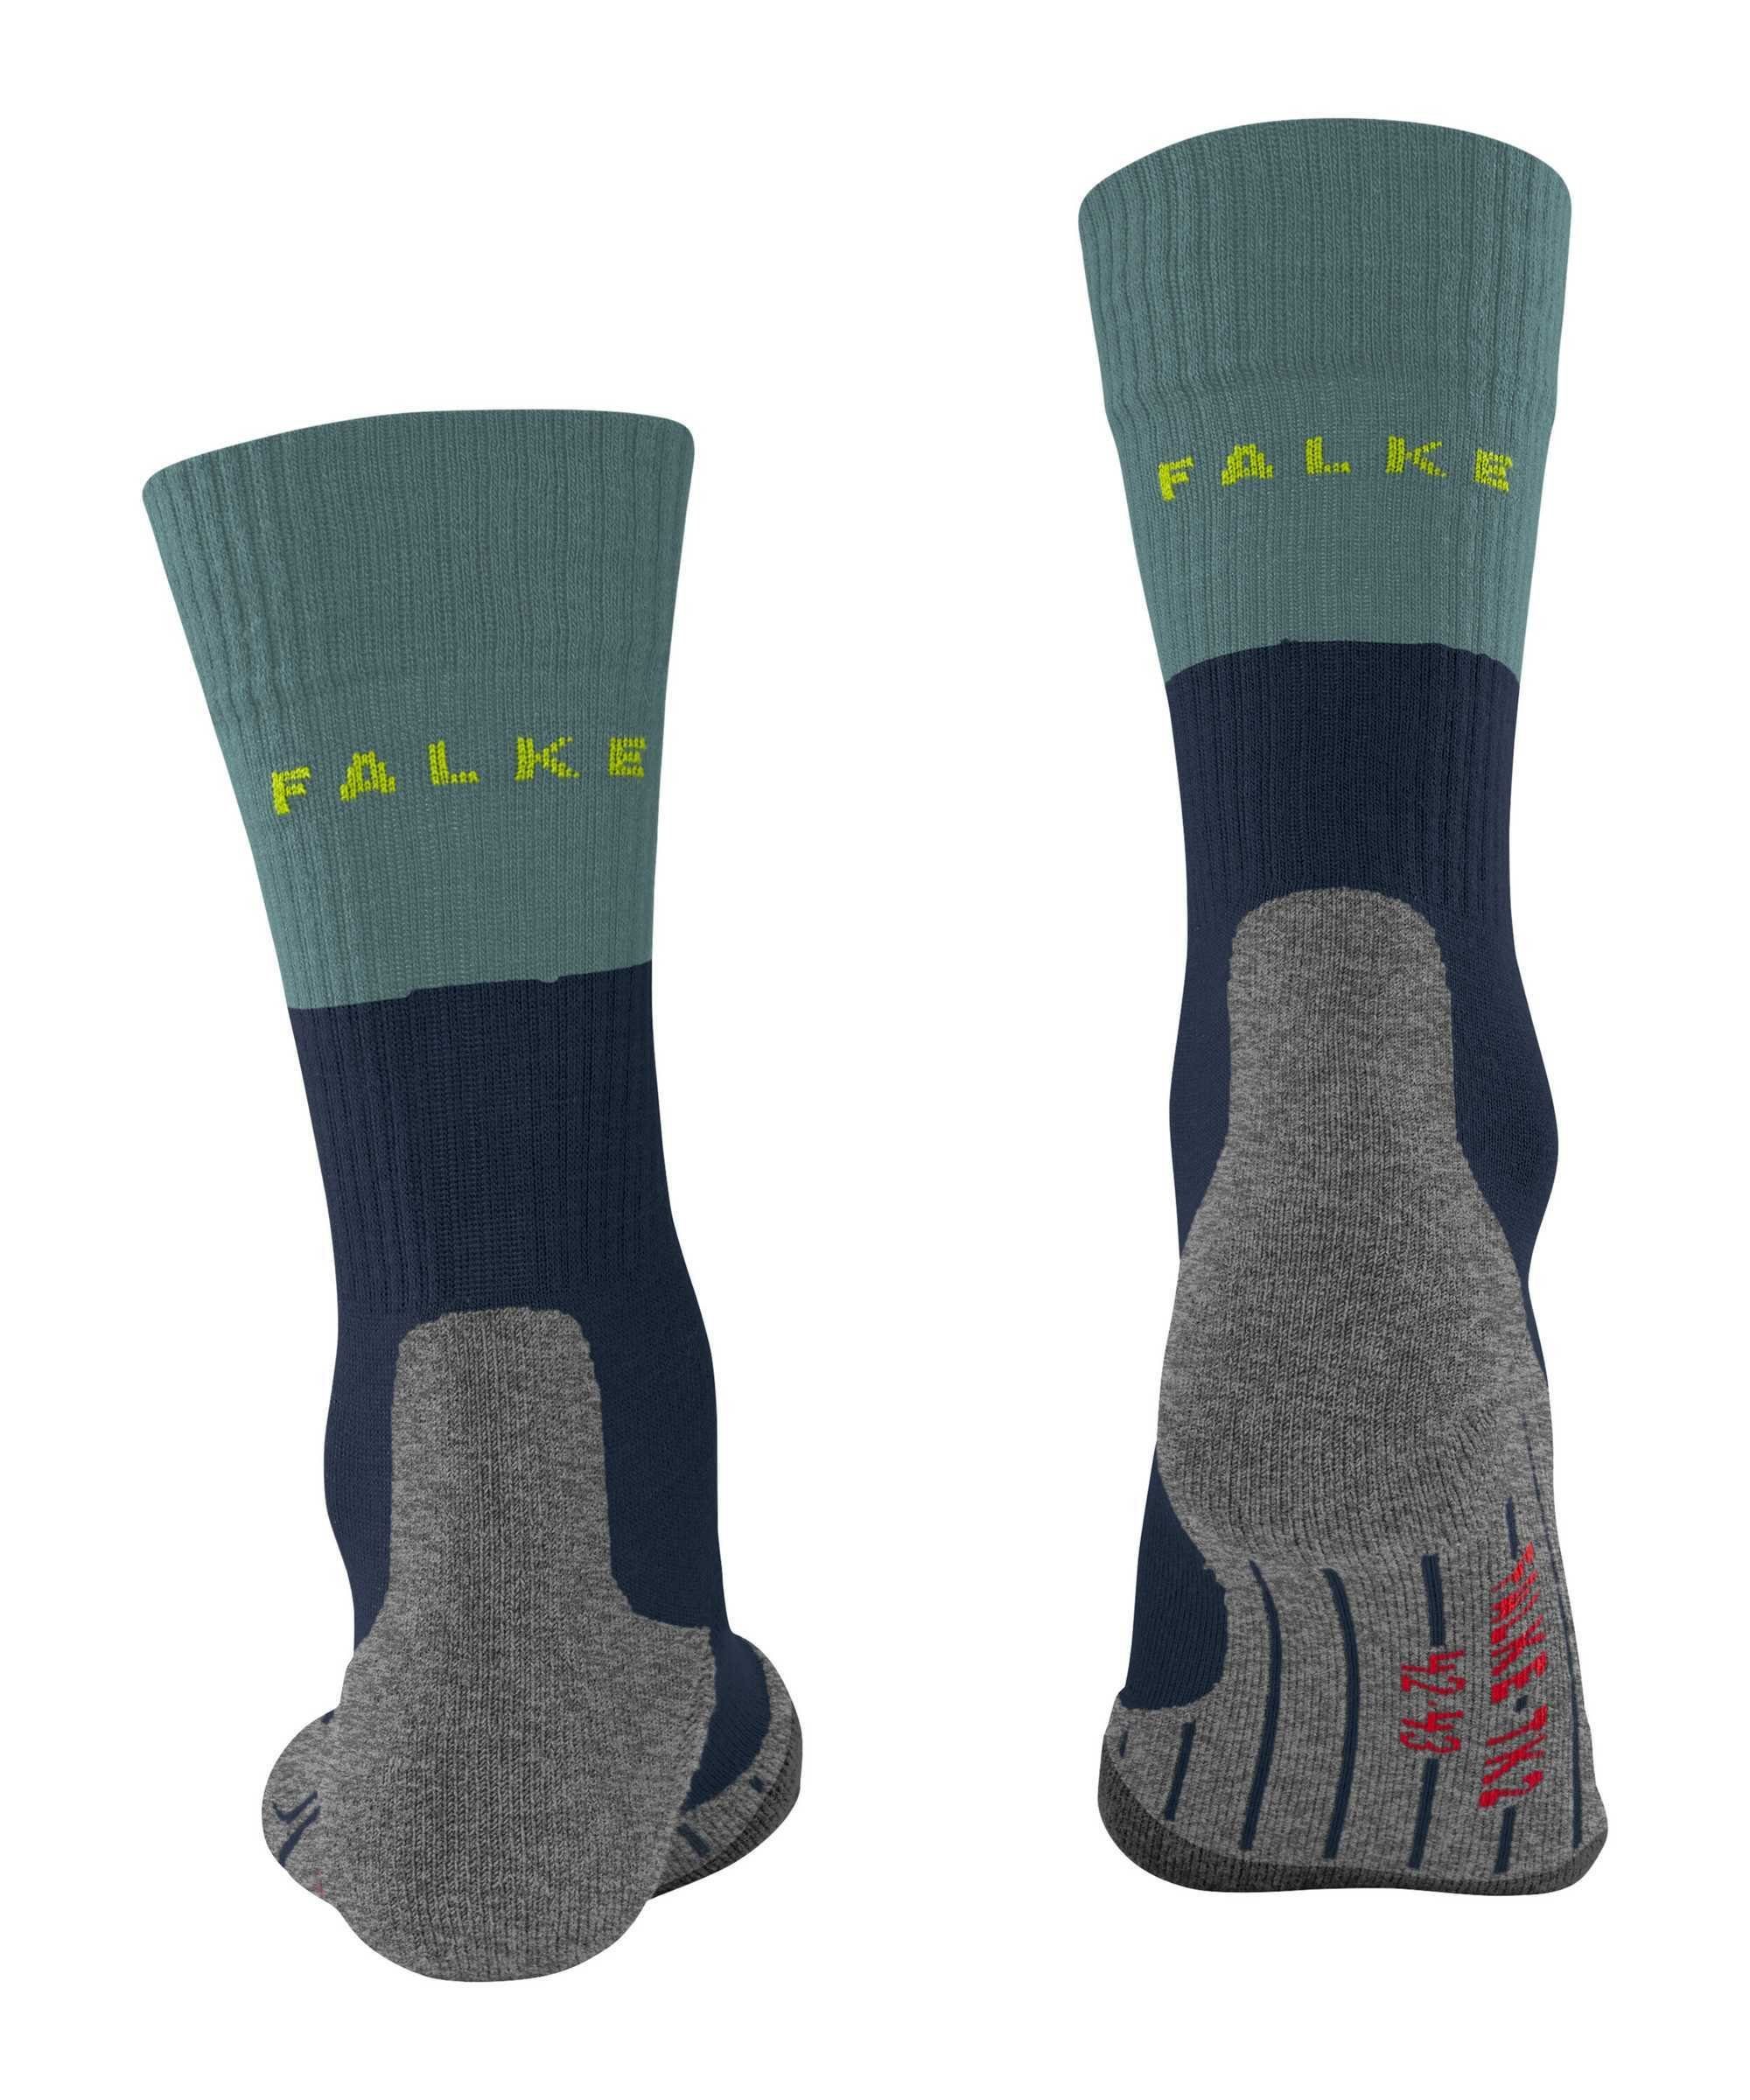 FALKE Sportsocken Grau/Blau - Socken Trekking (Marine) Socken Herren Polsterung TK2